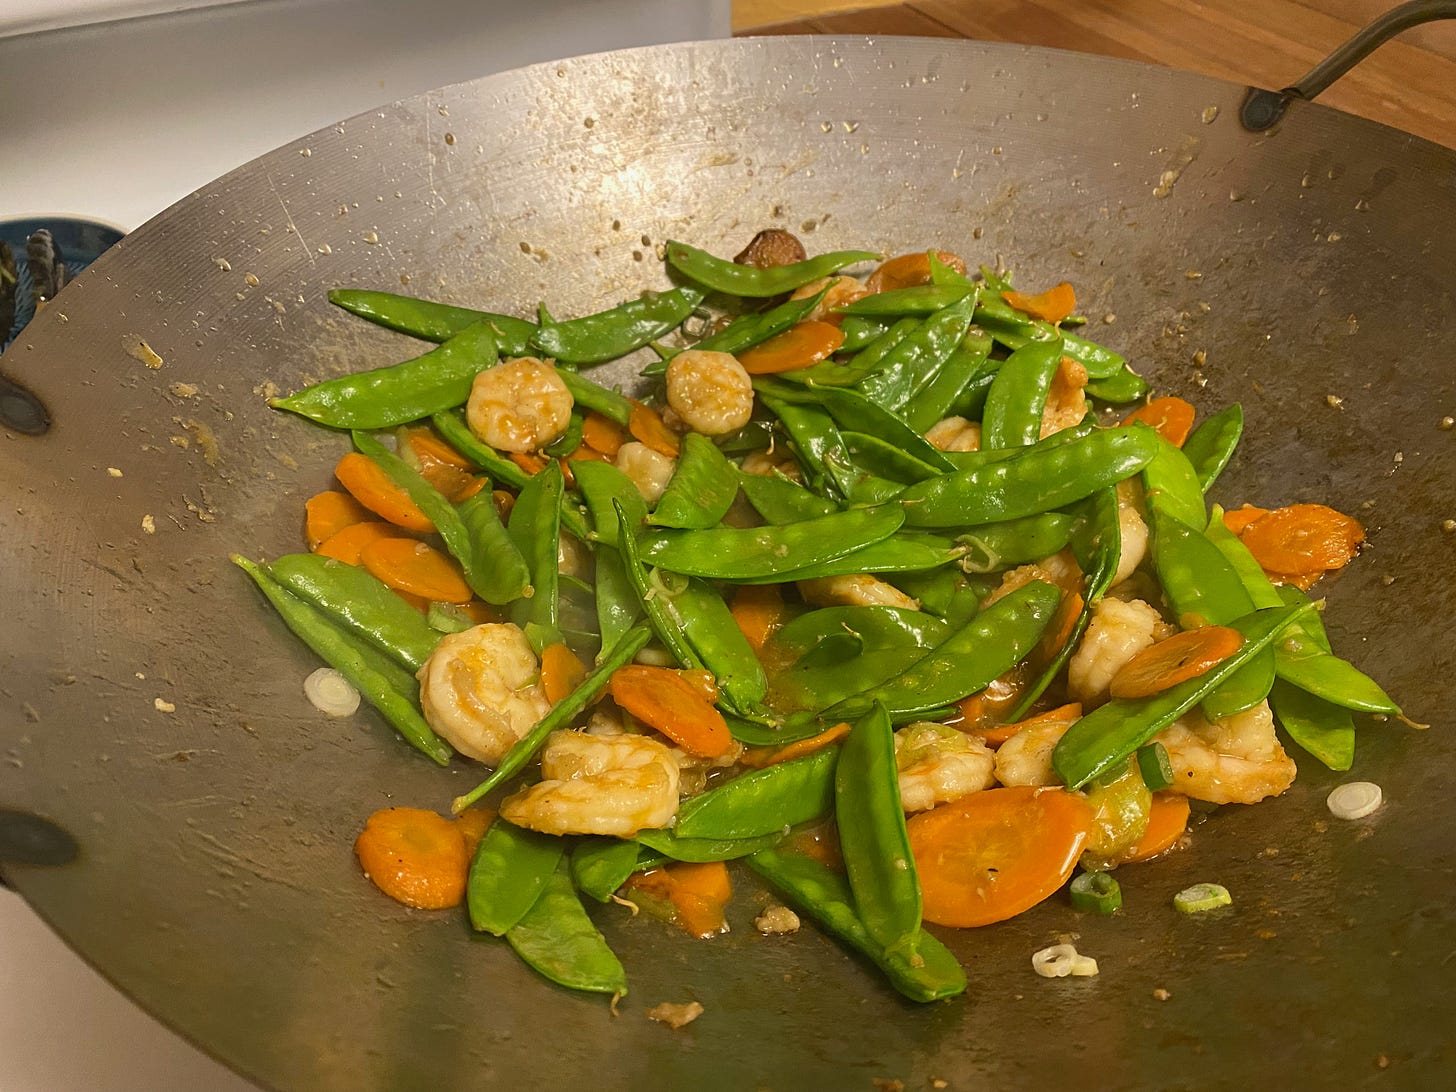 A wok full of stir-fried shrimp, snow peas, and carrots.